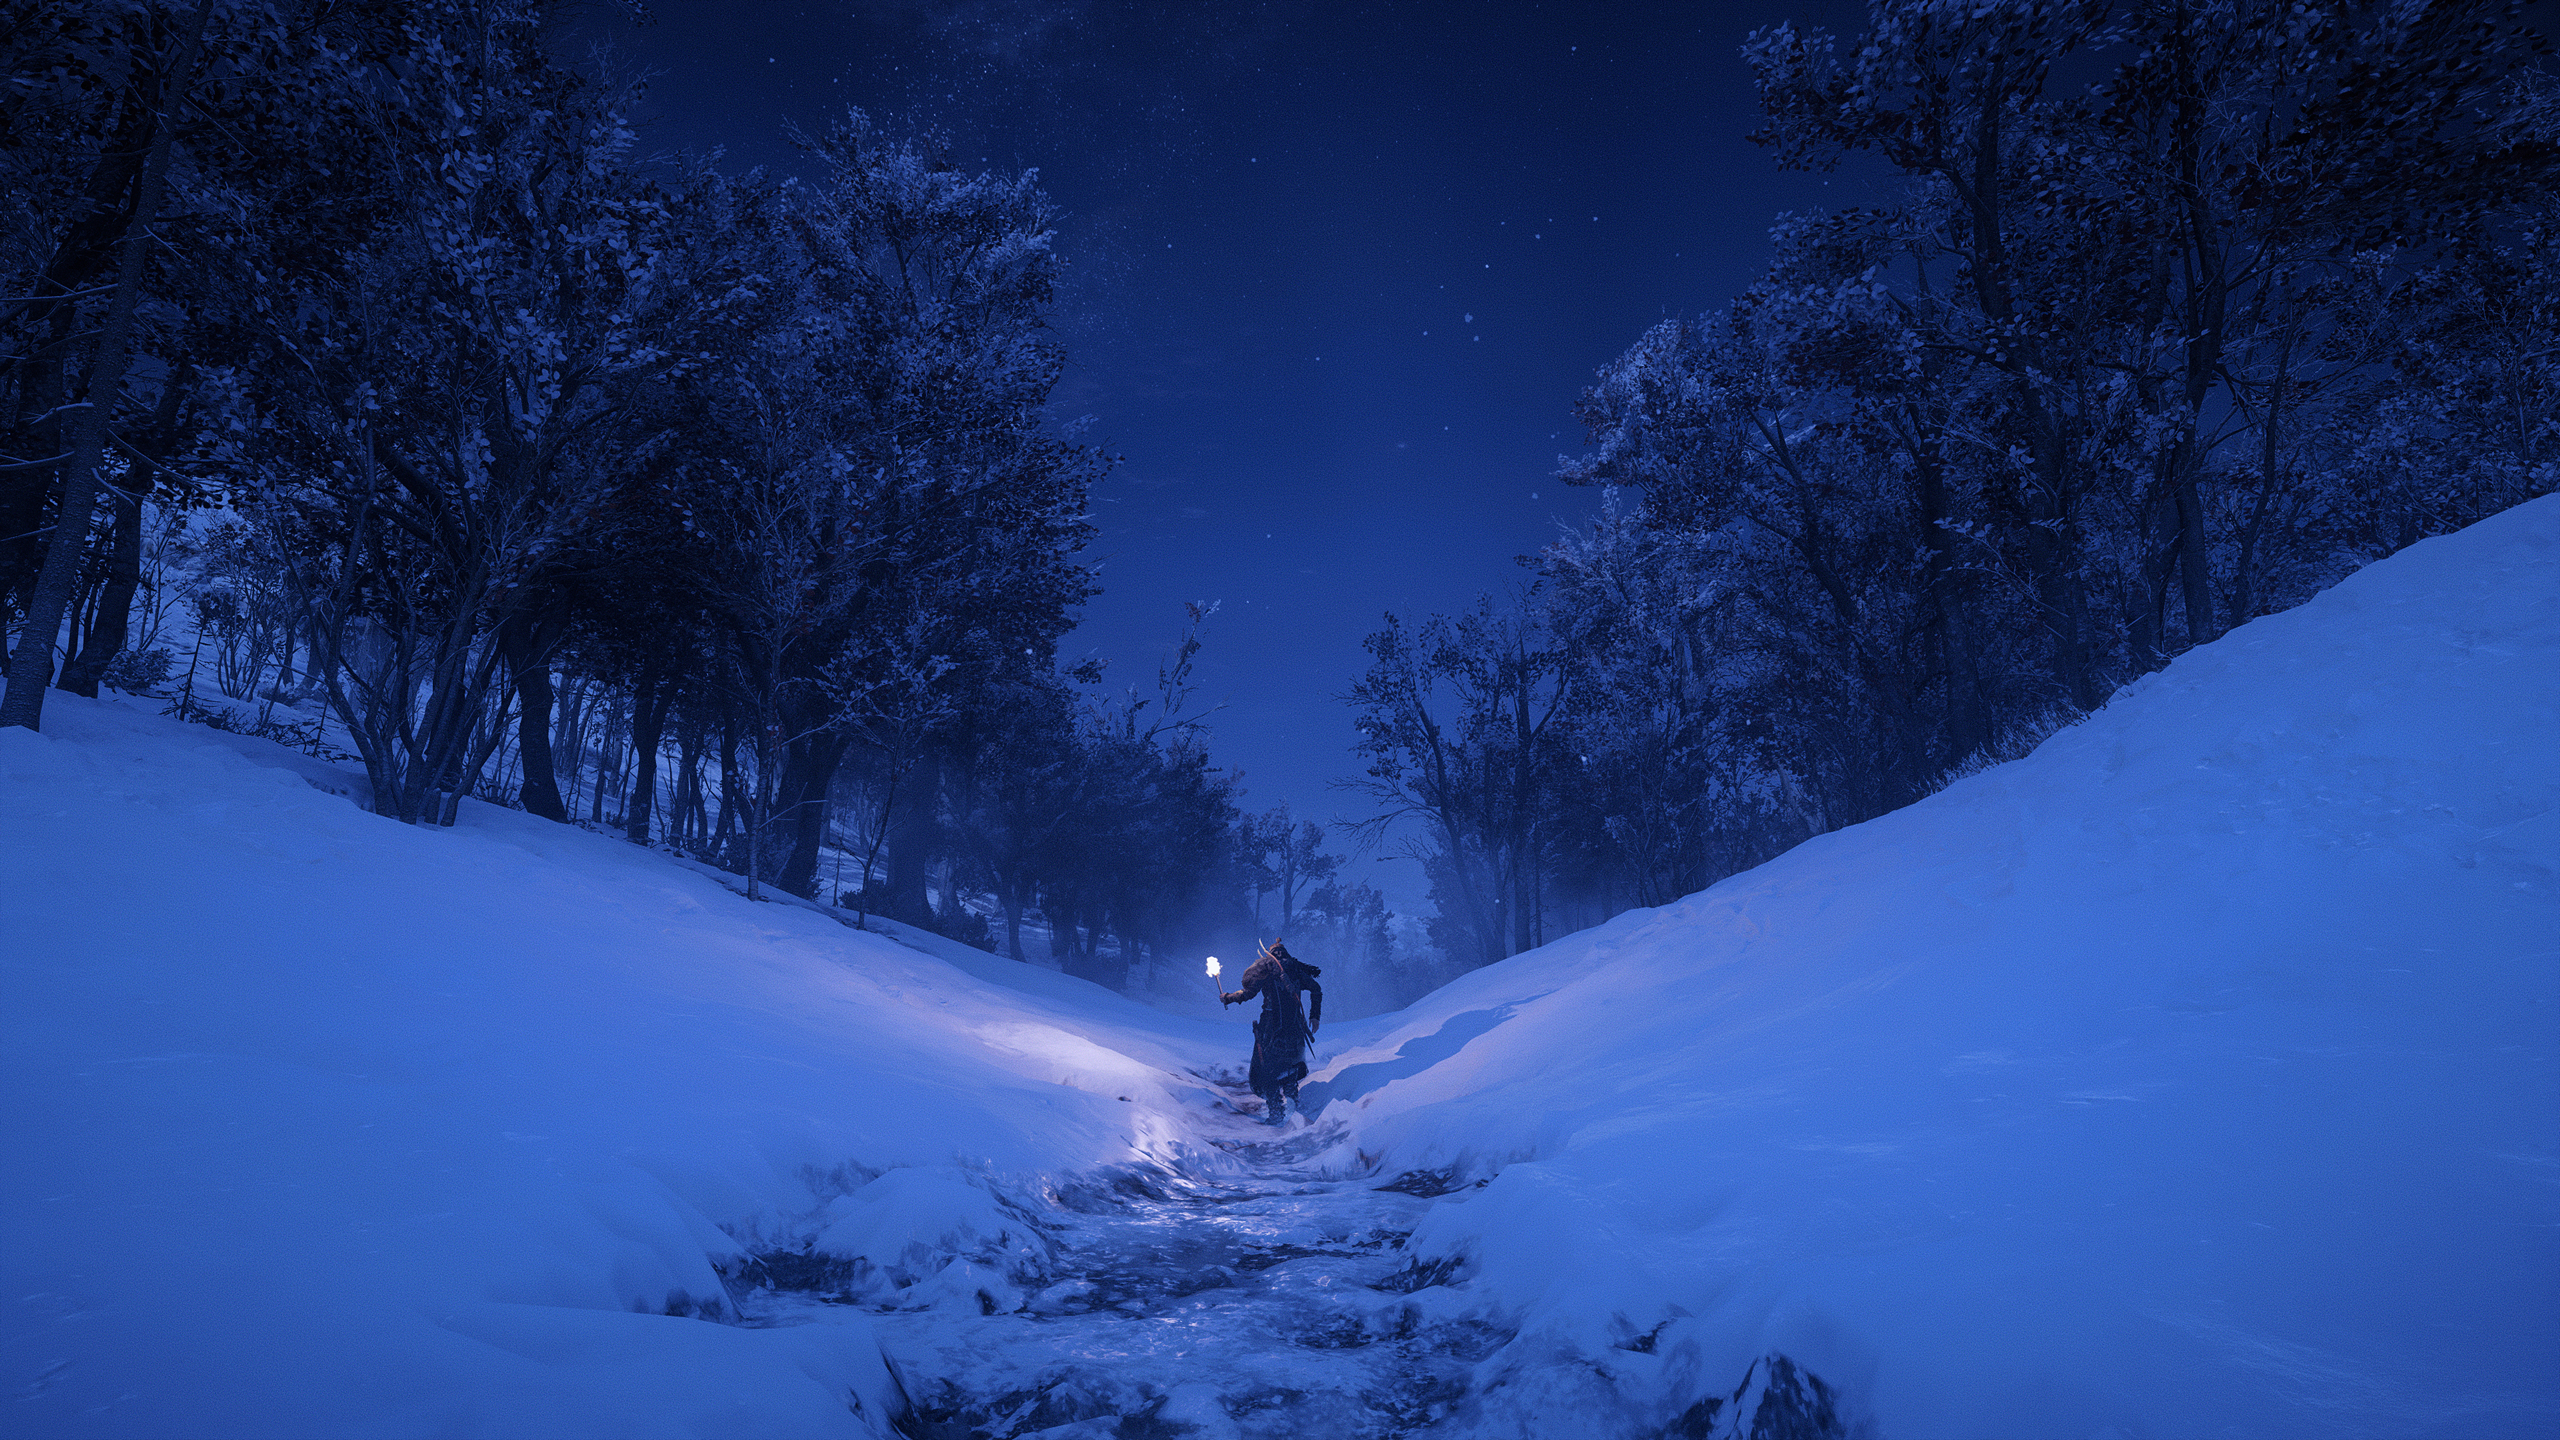 Assassins Creed Valhalla Eivor Assassin S Creed Valhalla Video Games Snow Night Trees Nature Forest  2560x1440